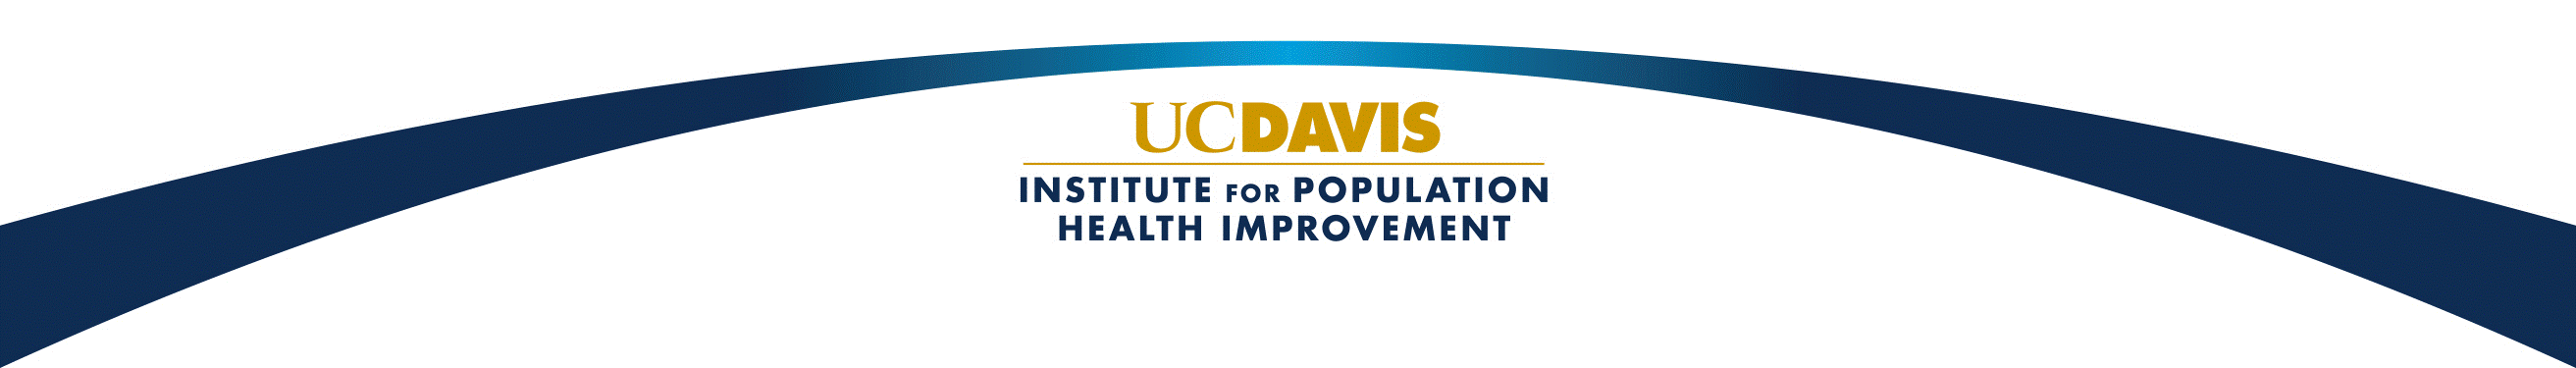 Institute for Population Health Improvement banner